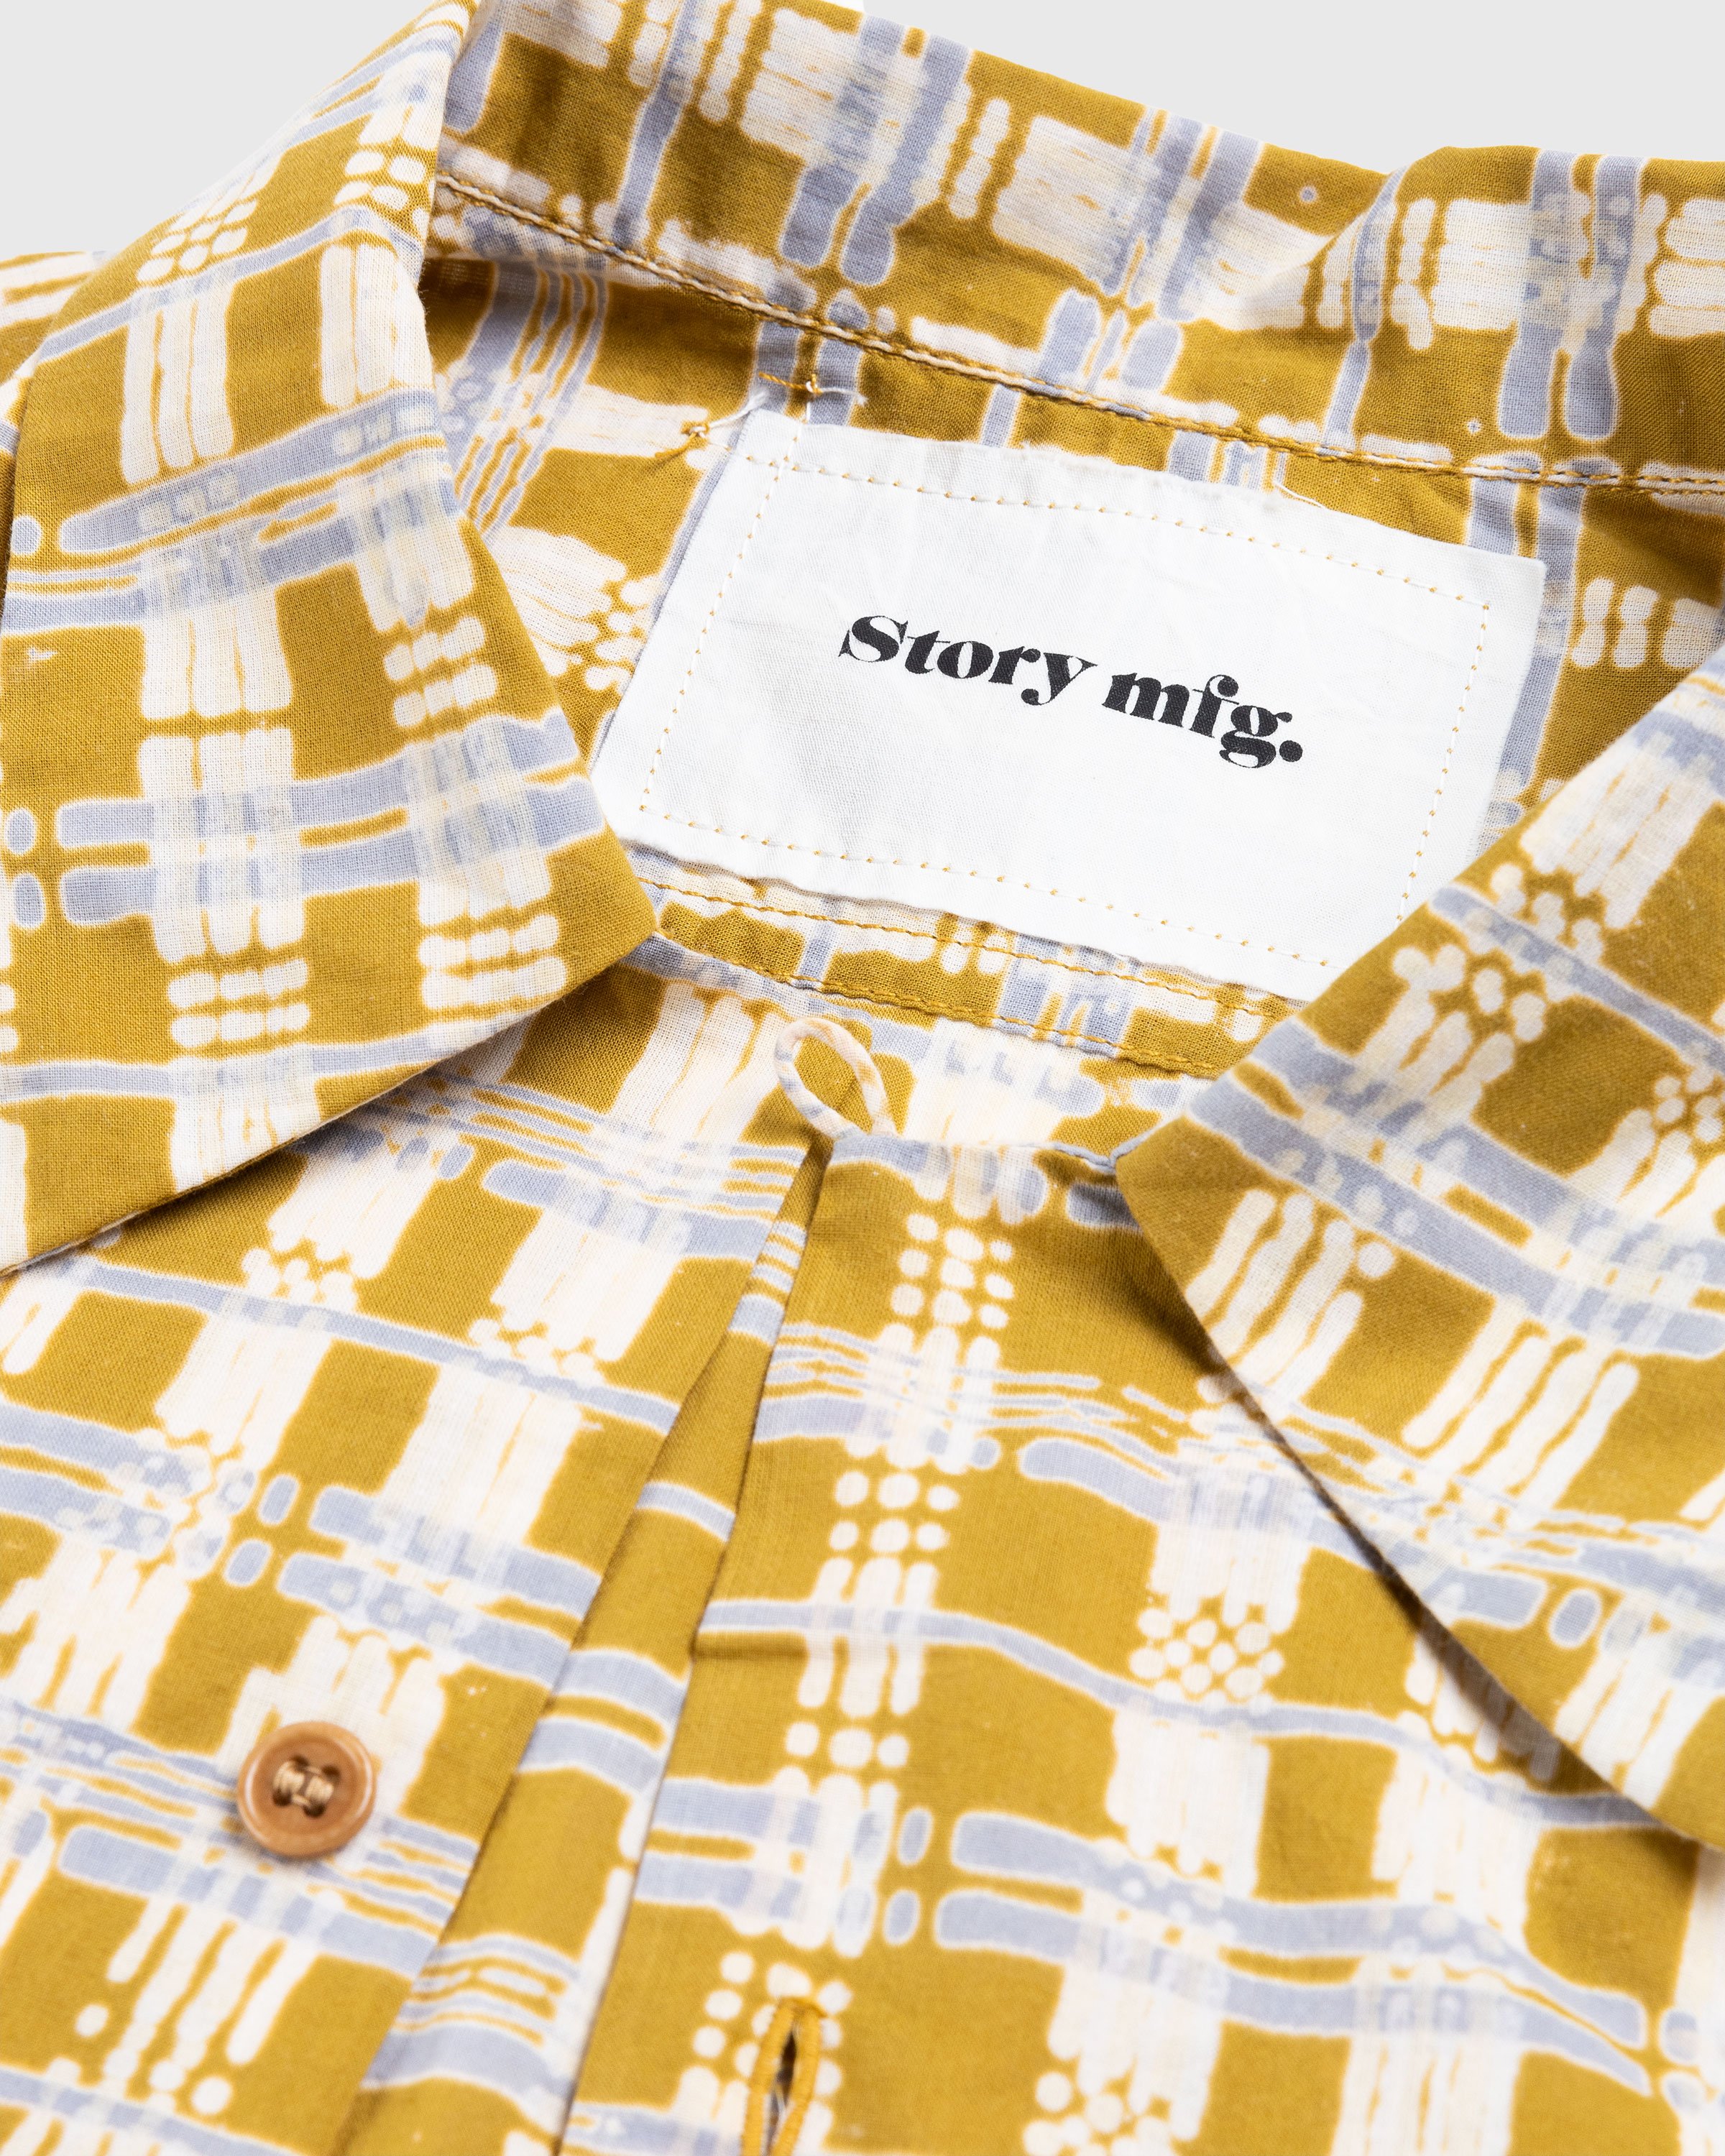 Story mfg. - Shore Shirt Check Block - Clothing - Yellow - Image 5